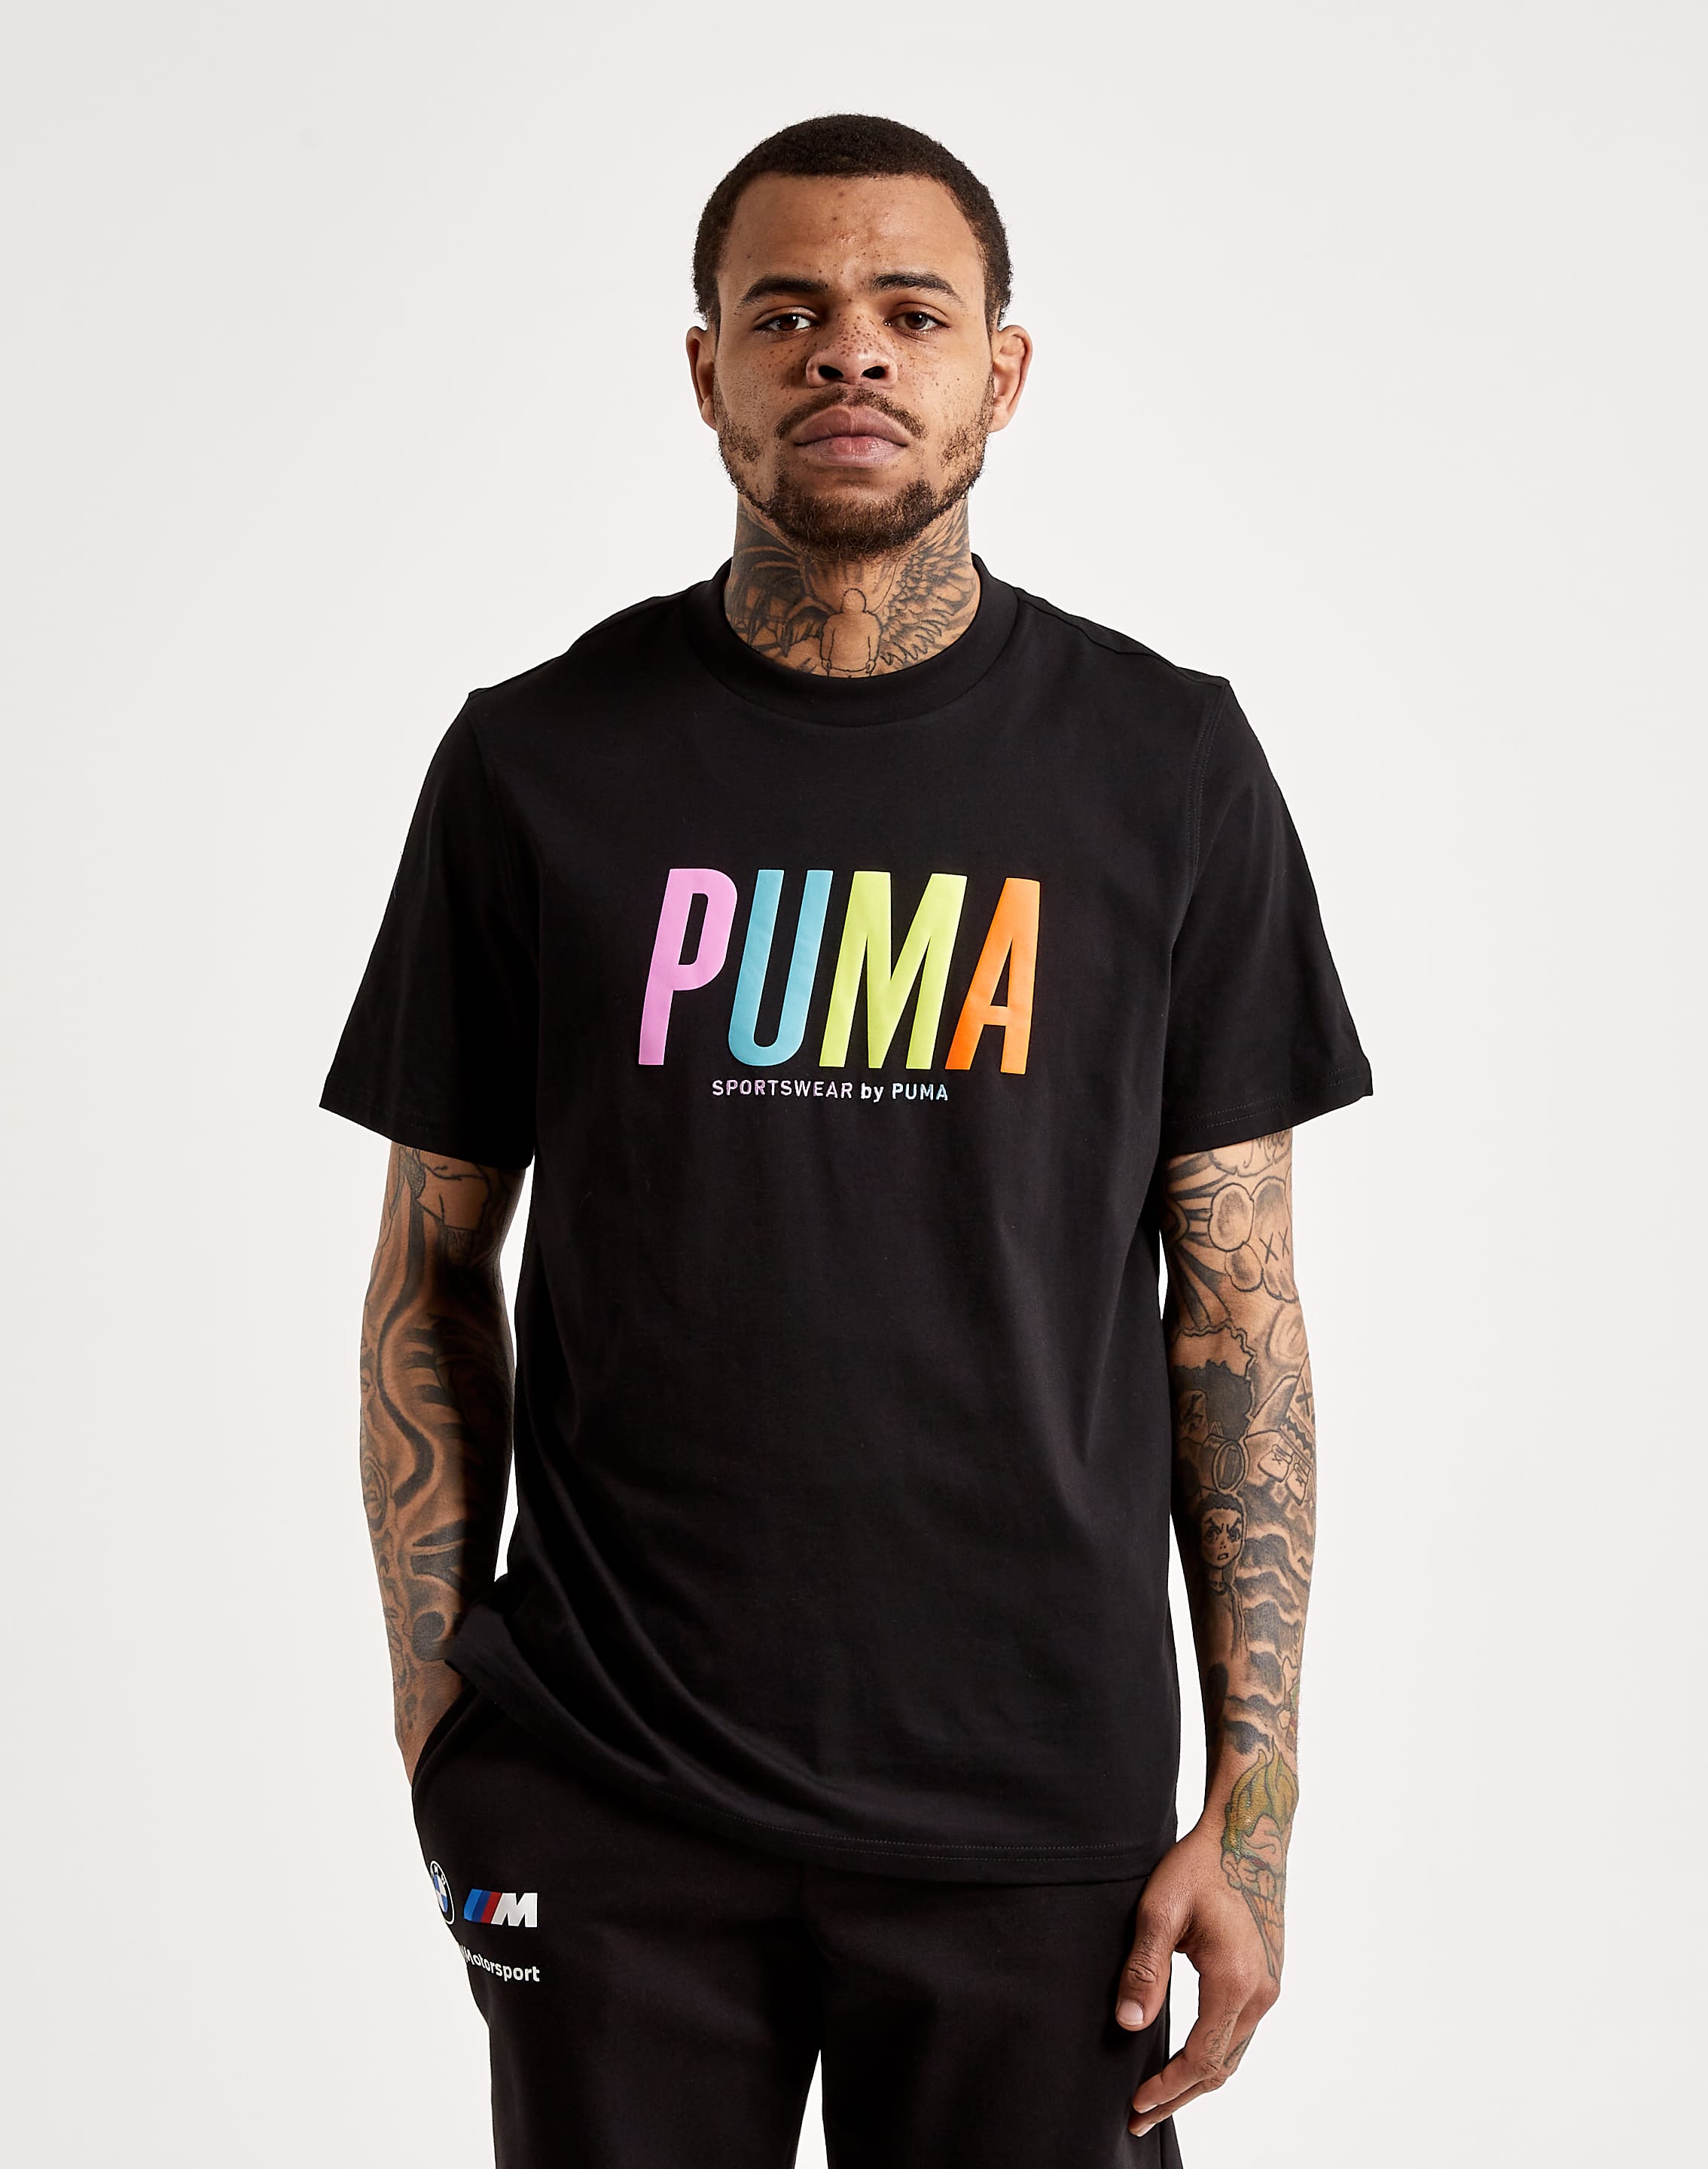 Puma Sportswear By Puma Graphic Tee – DTLR